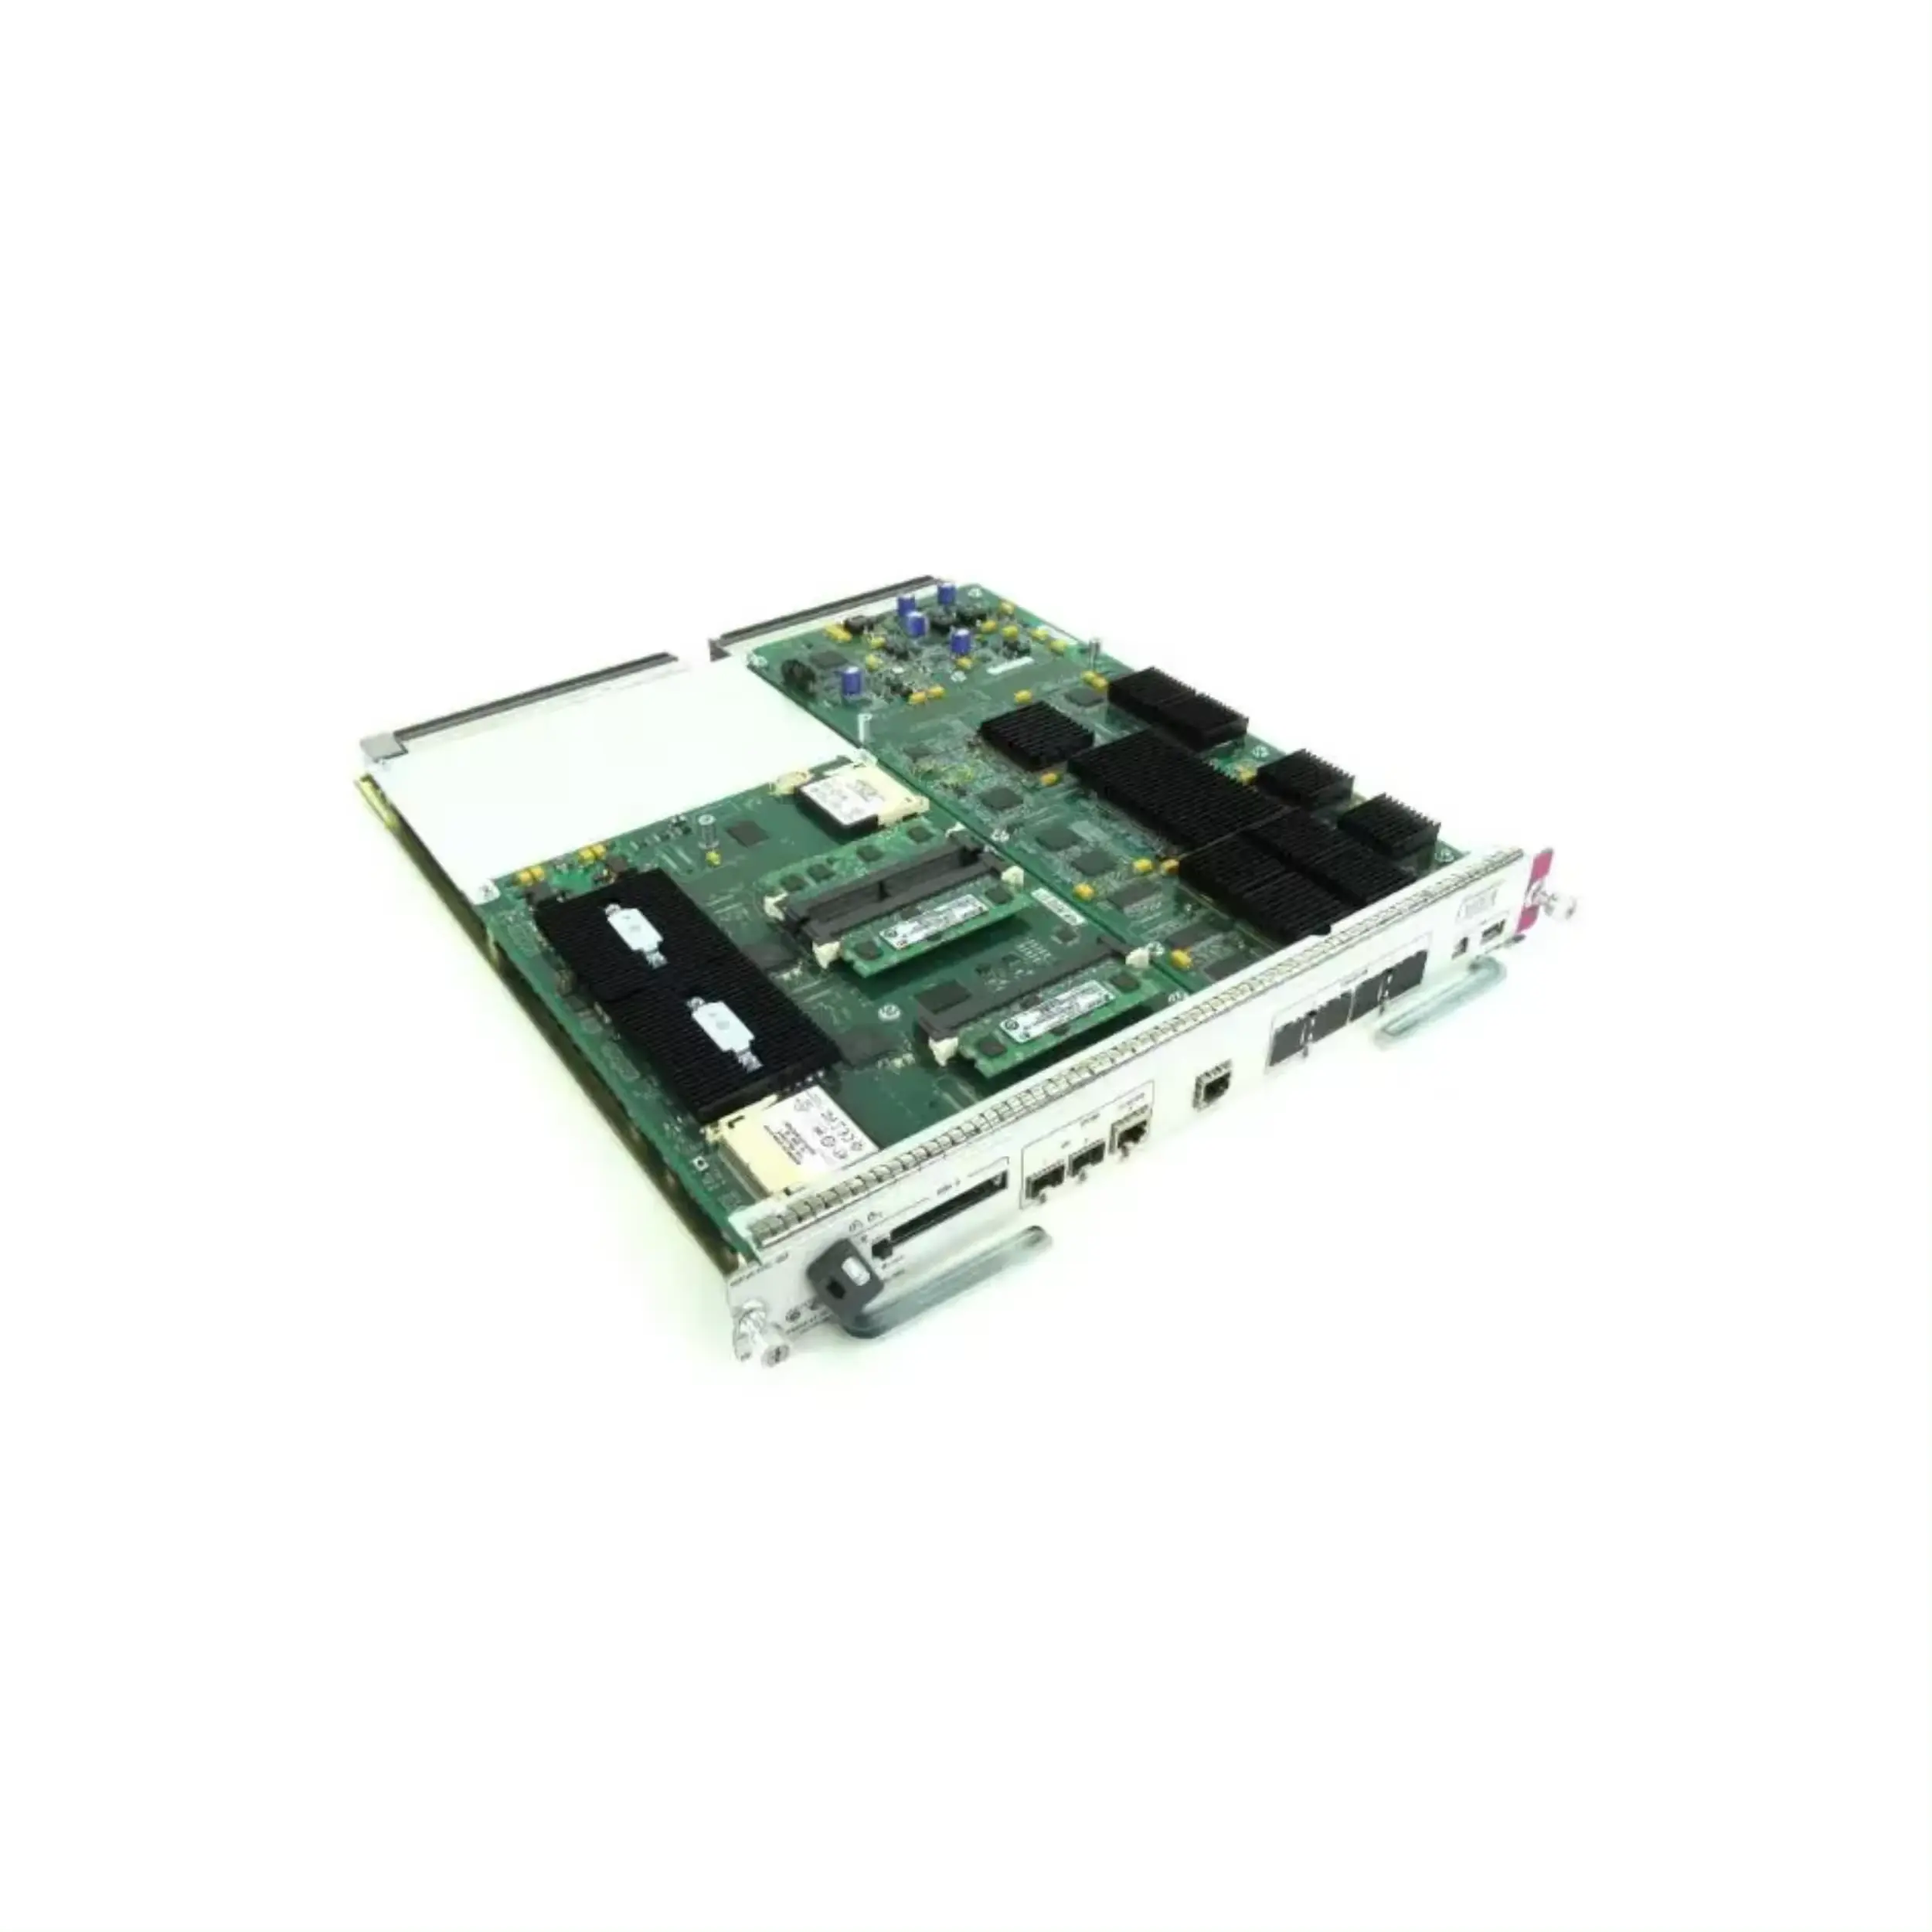 मूल प्रयुक्त RSP720-3CXL-10GE 7600 सीरीज 720gbps राउटर स्विच प्रोसेसर